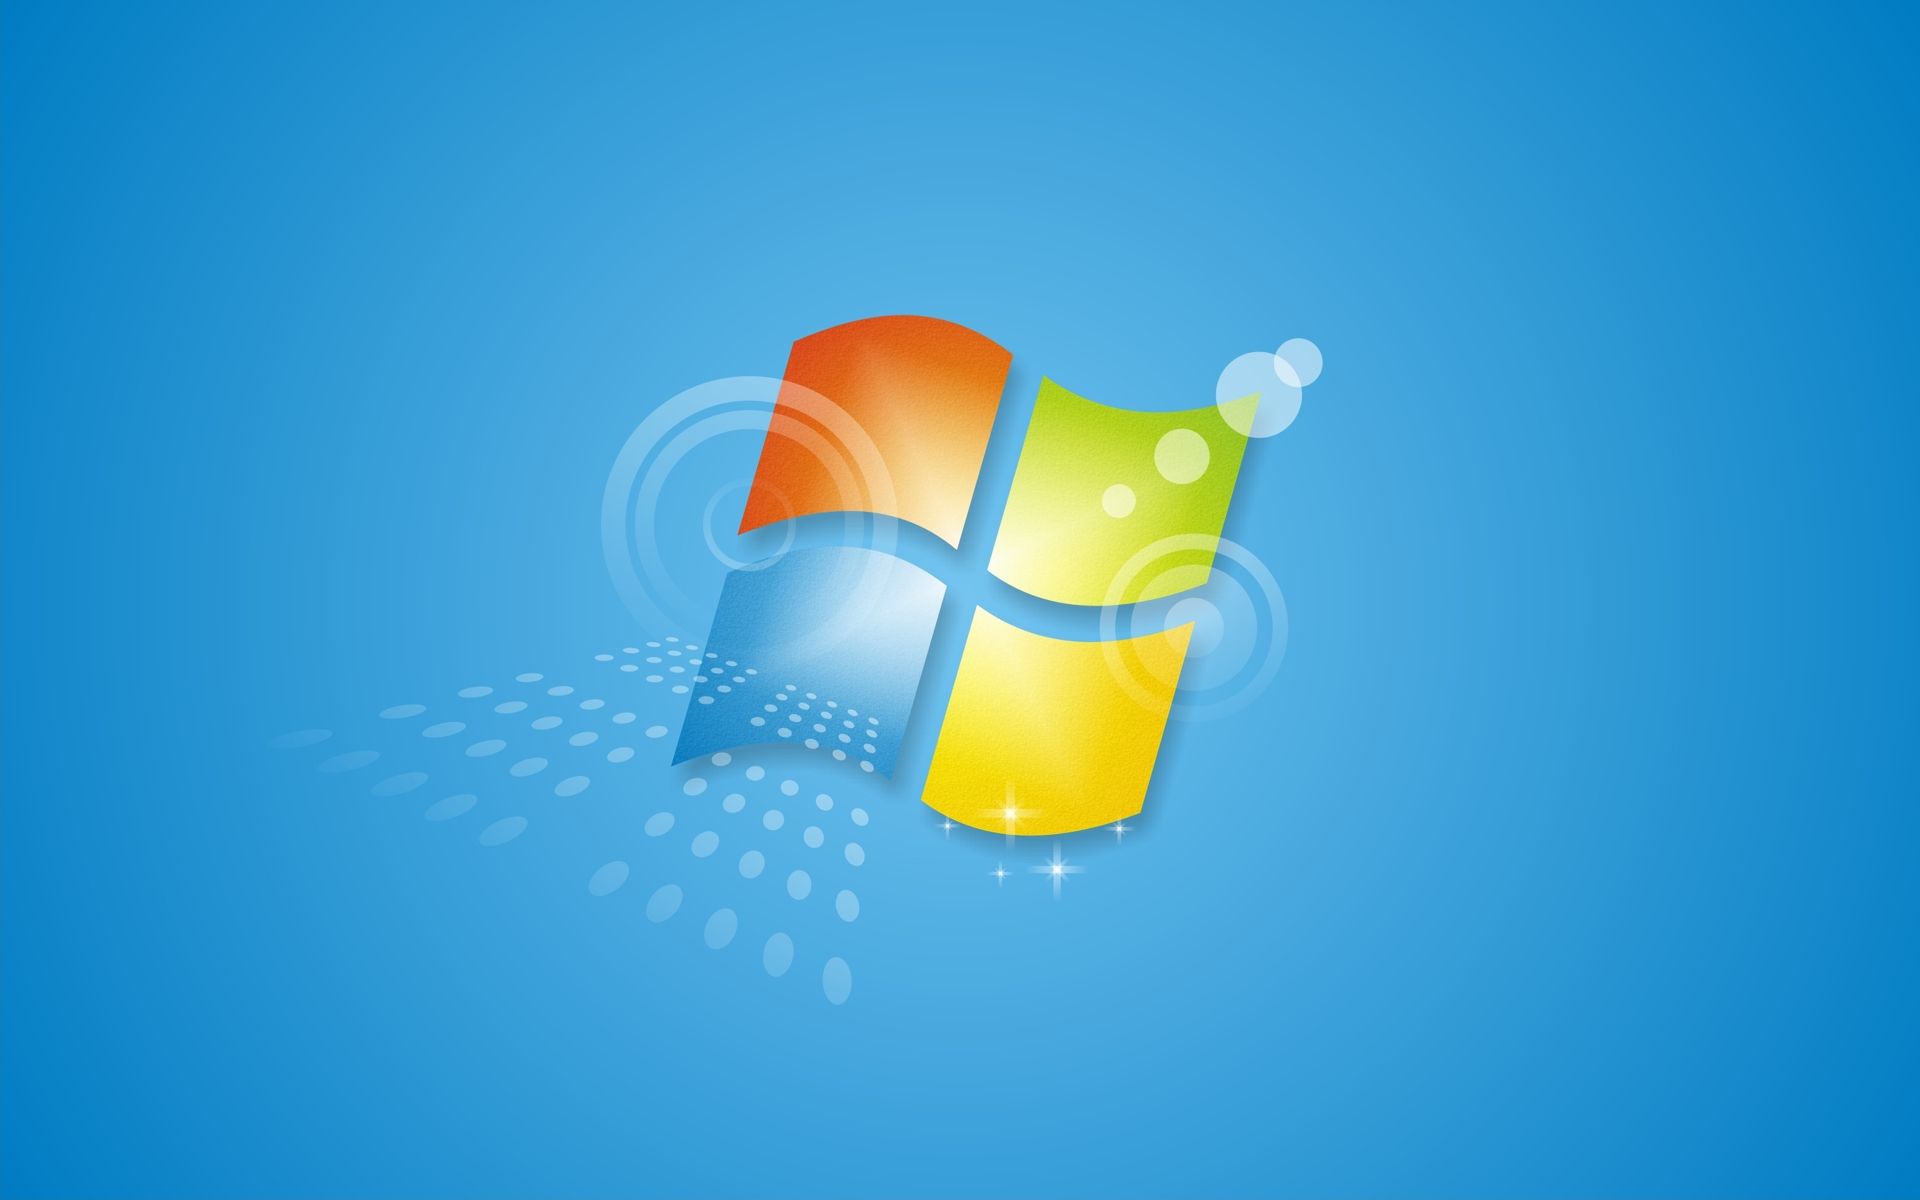 Windows 7 Alternate Blue Wallpaper | HD Wallpapers Download